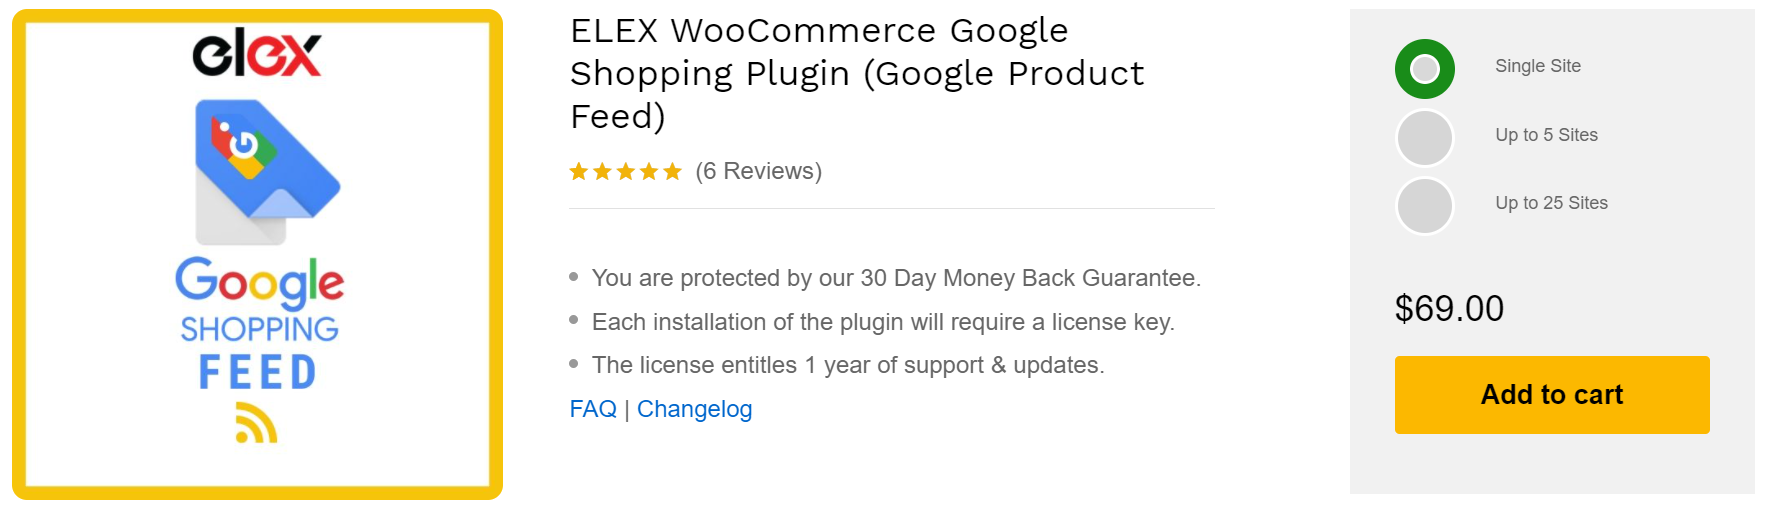 ELEX Google Shopping Plugin 